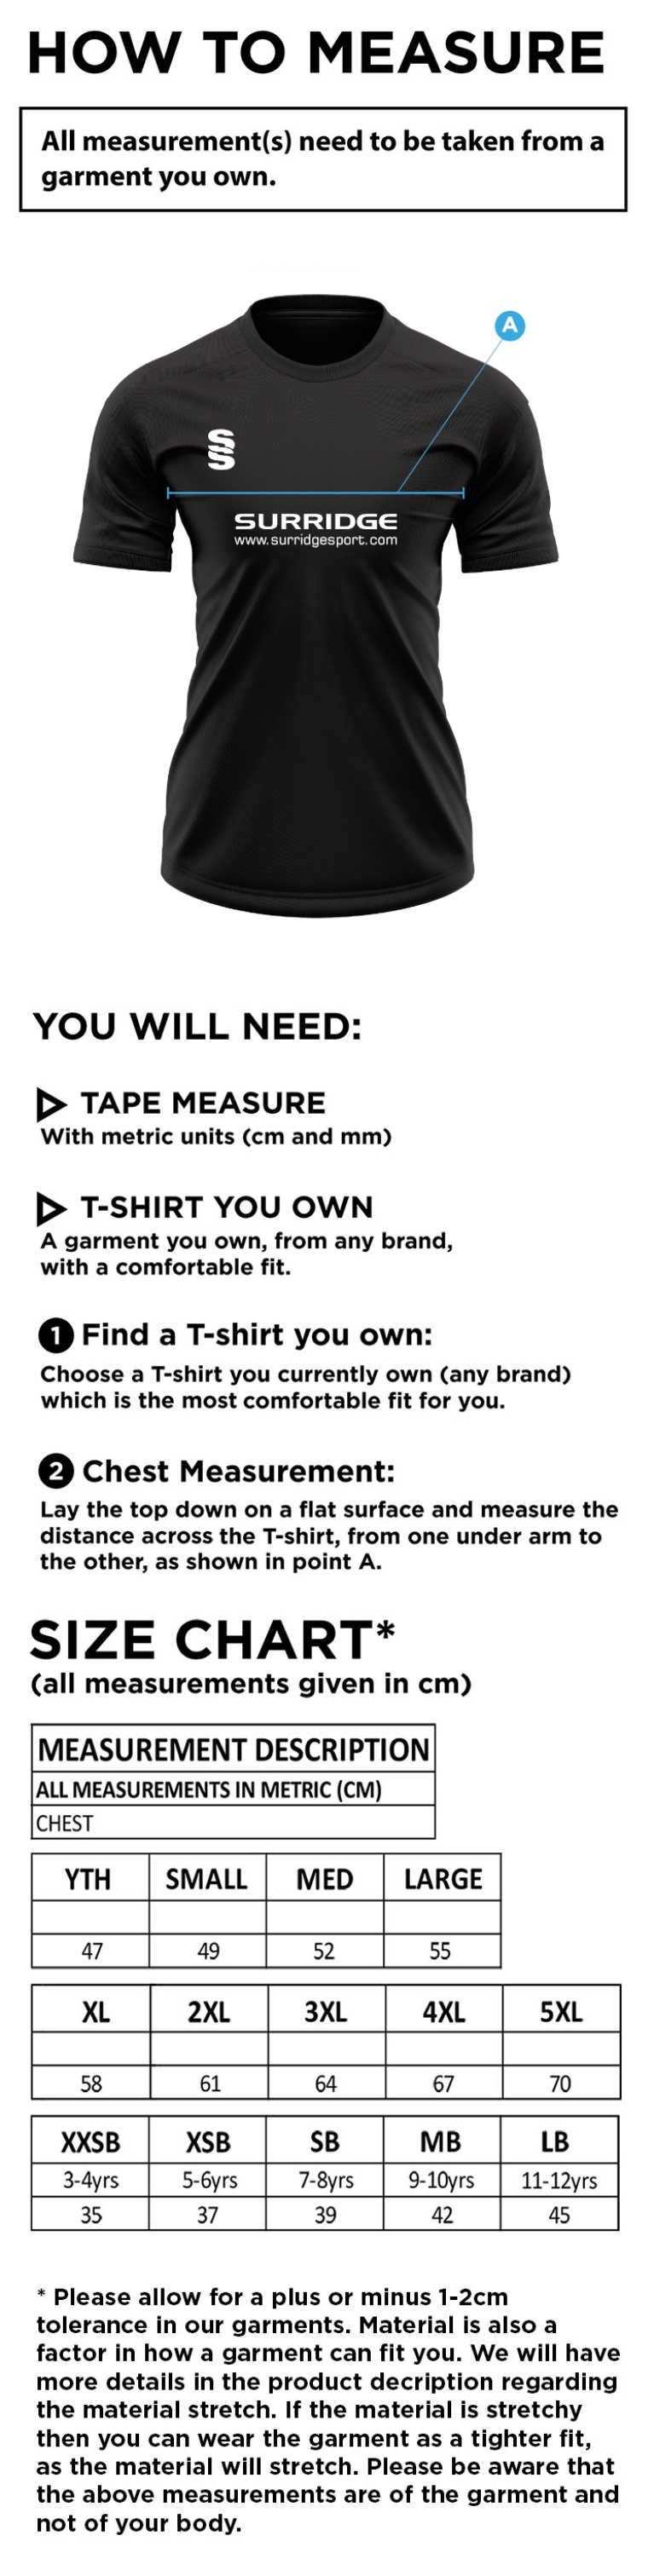 Women's Fuse Training Shirt : Black / White - Size Guide